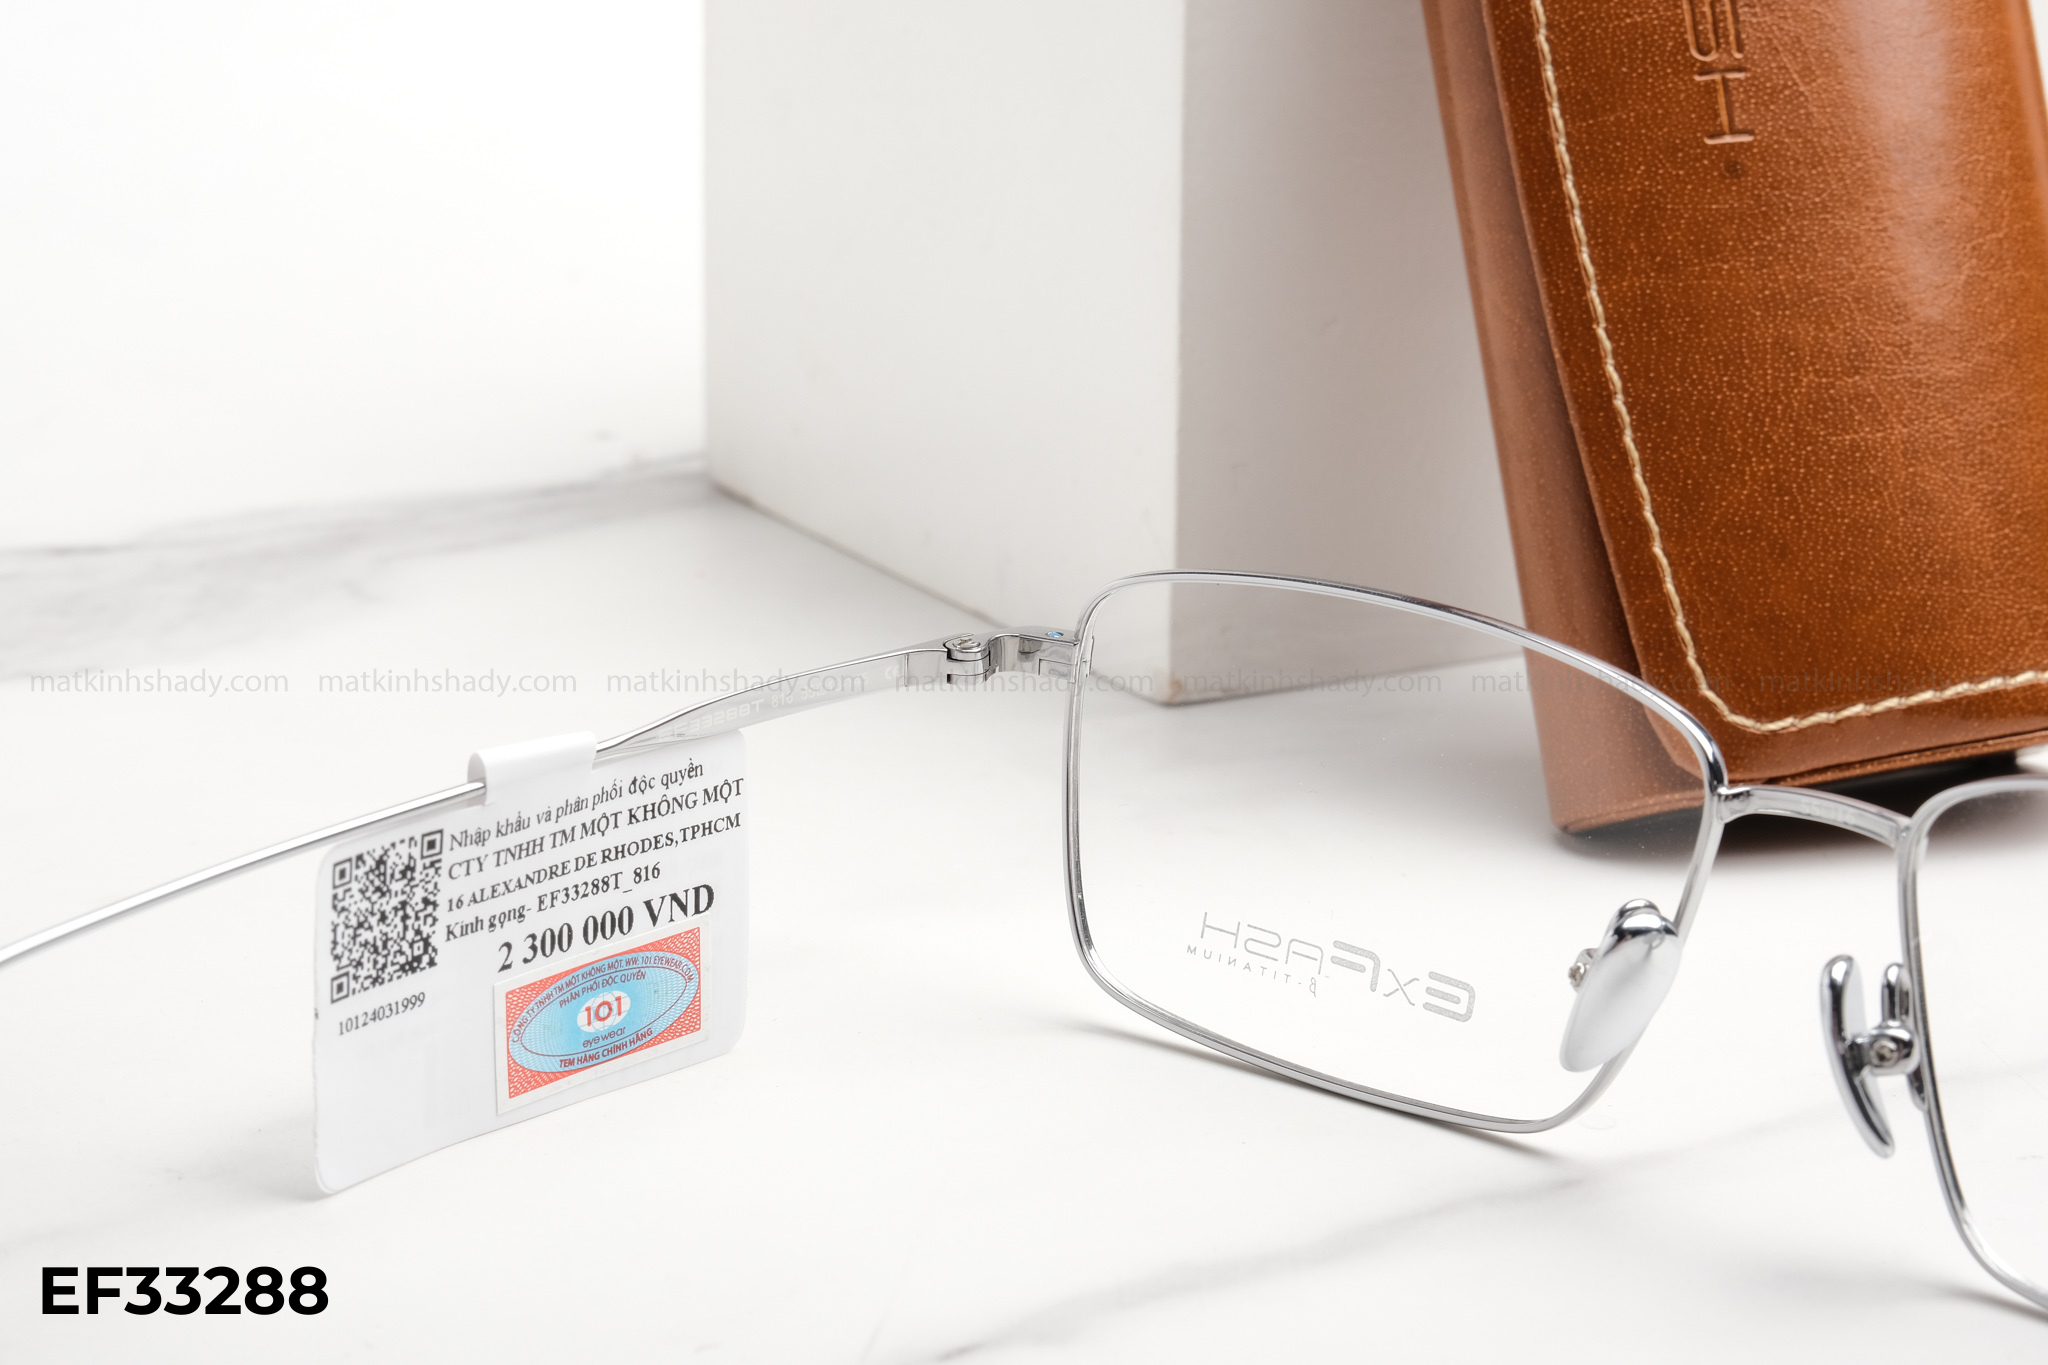  Exfash Eyewear - Glasses - EF33288 